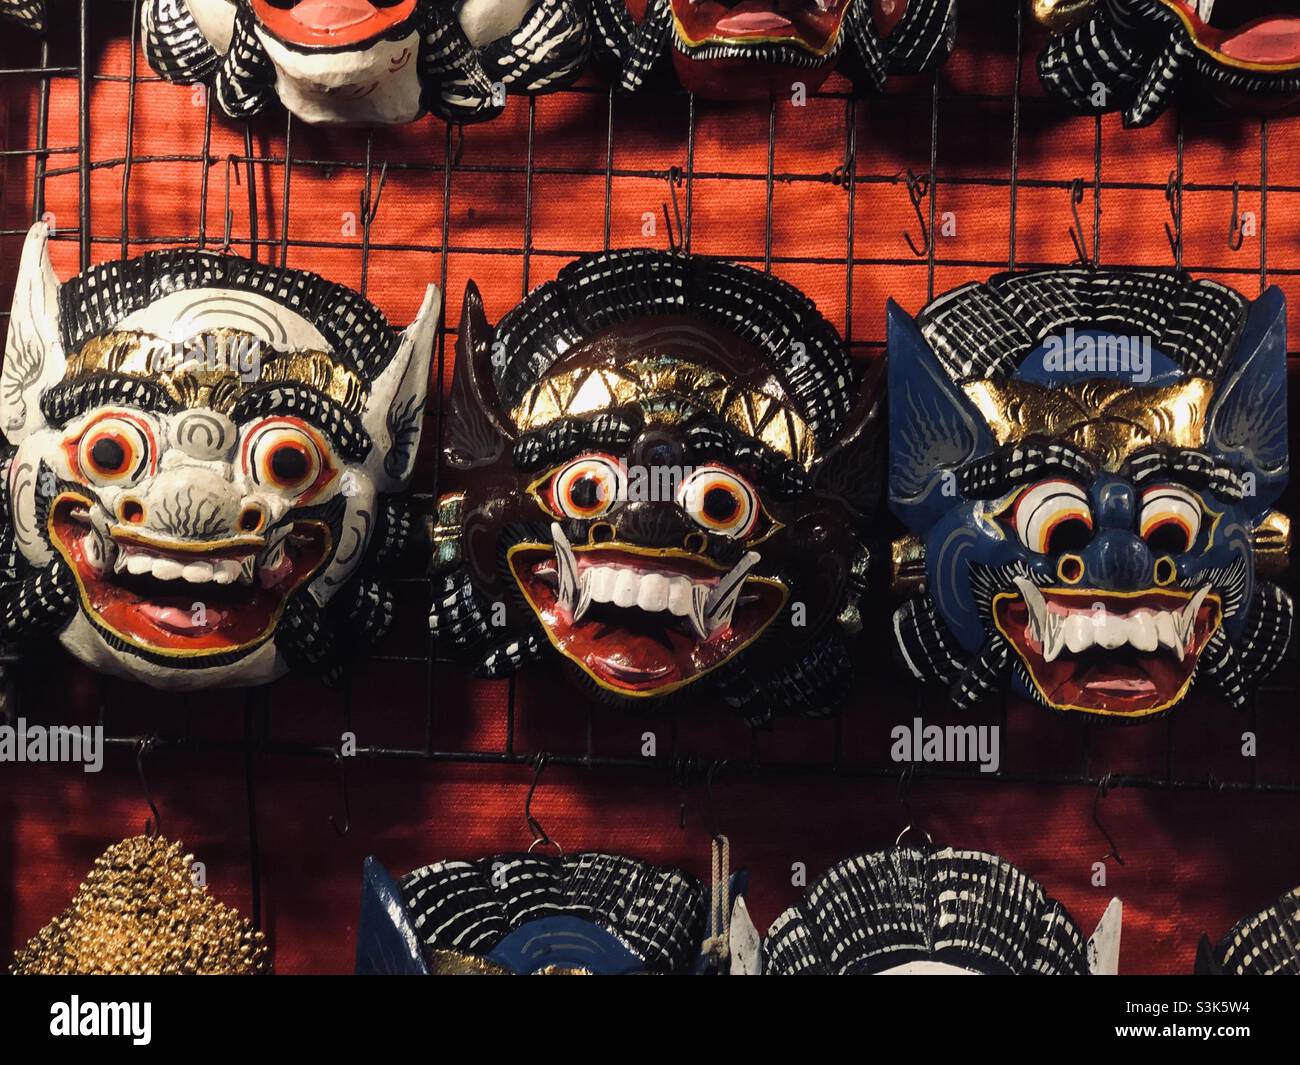 Halloween masks on display Stock Photo - Alamy